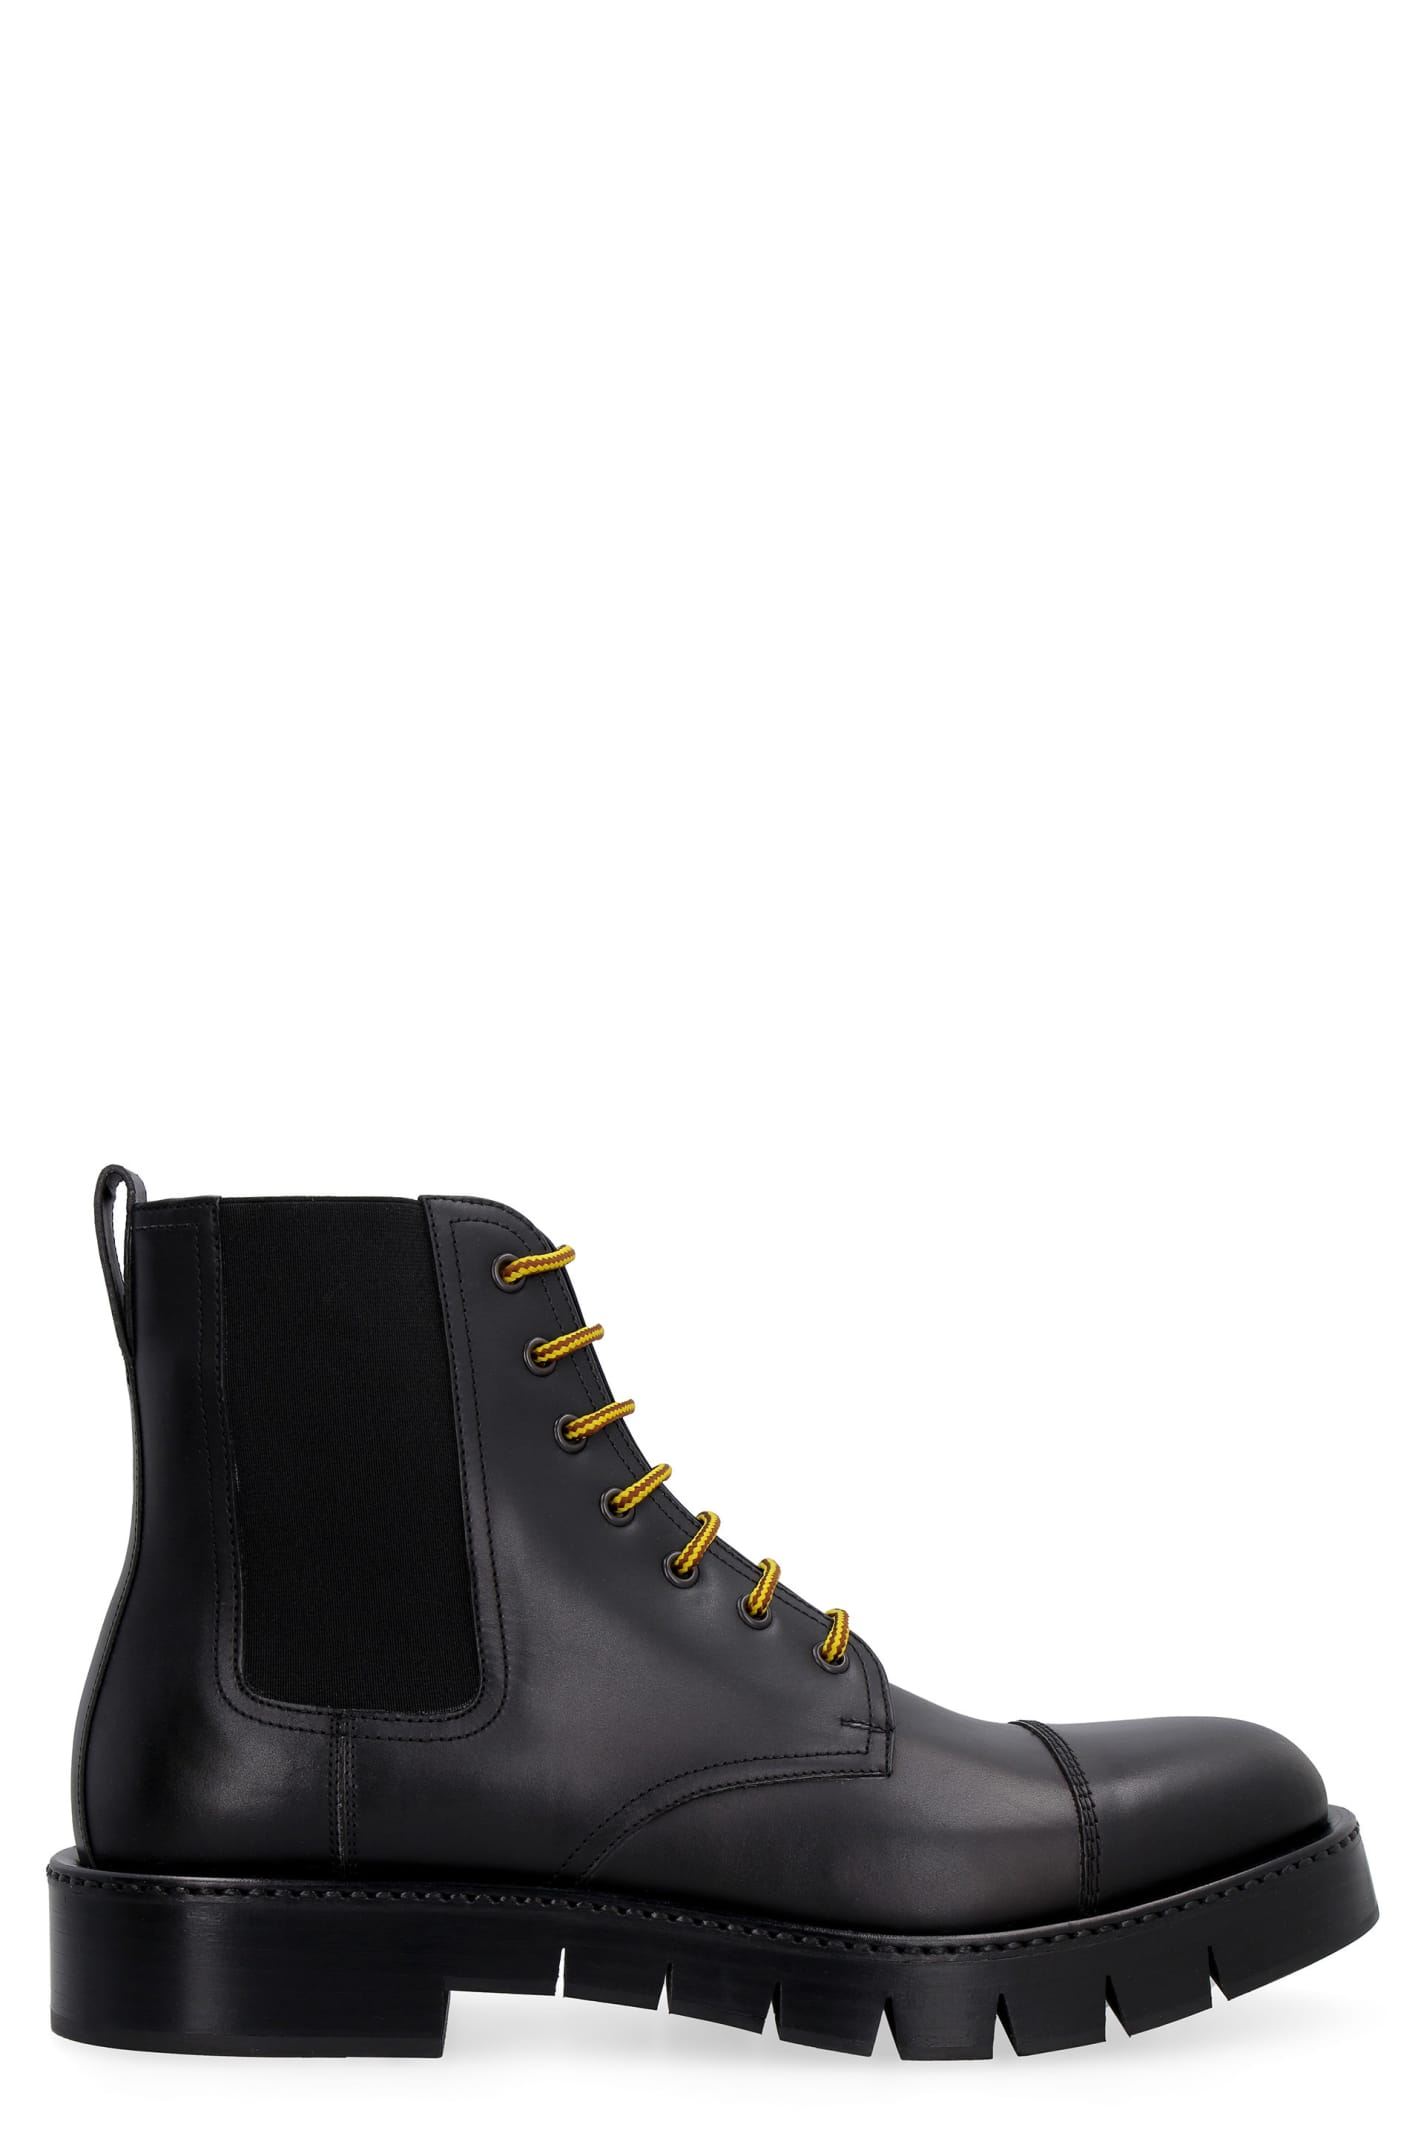 Salvatore Ferragamo Rosco Leather Combat Boots